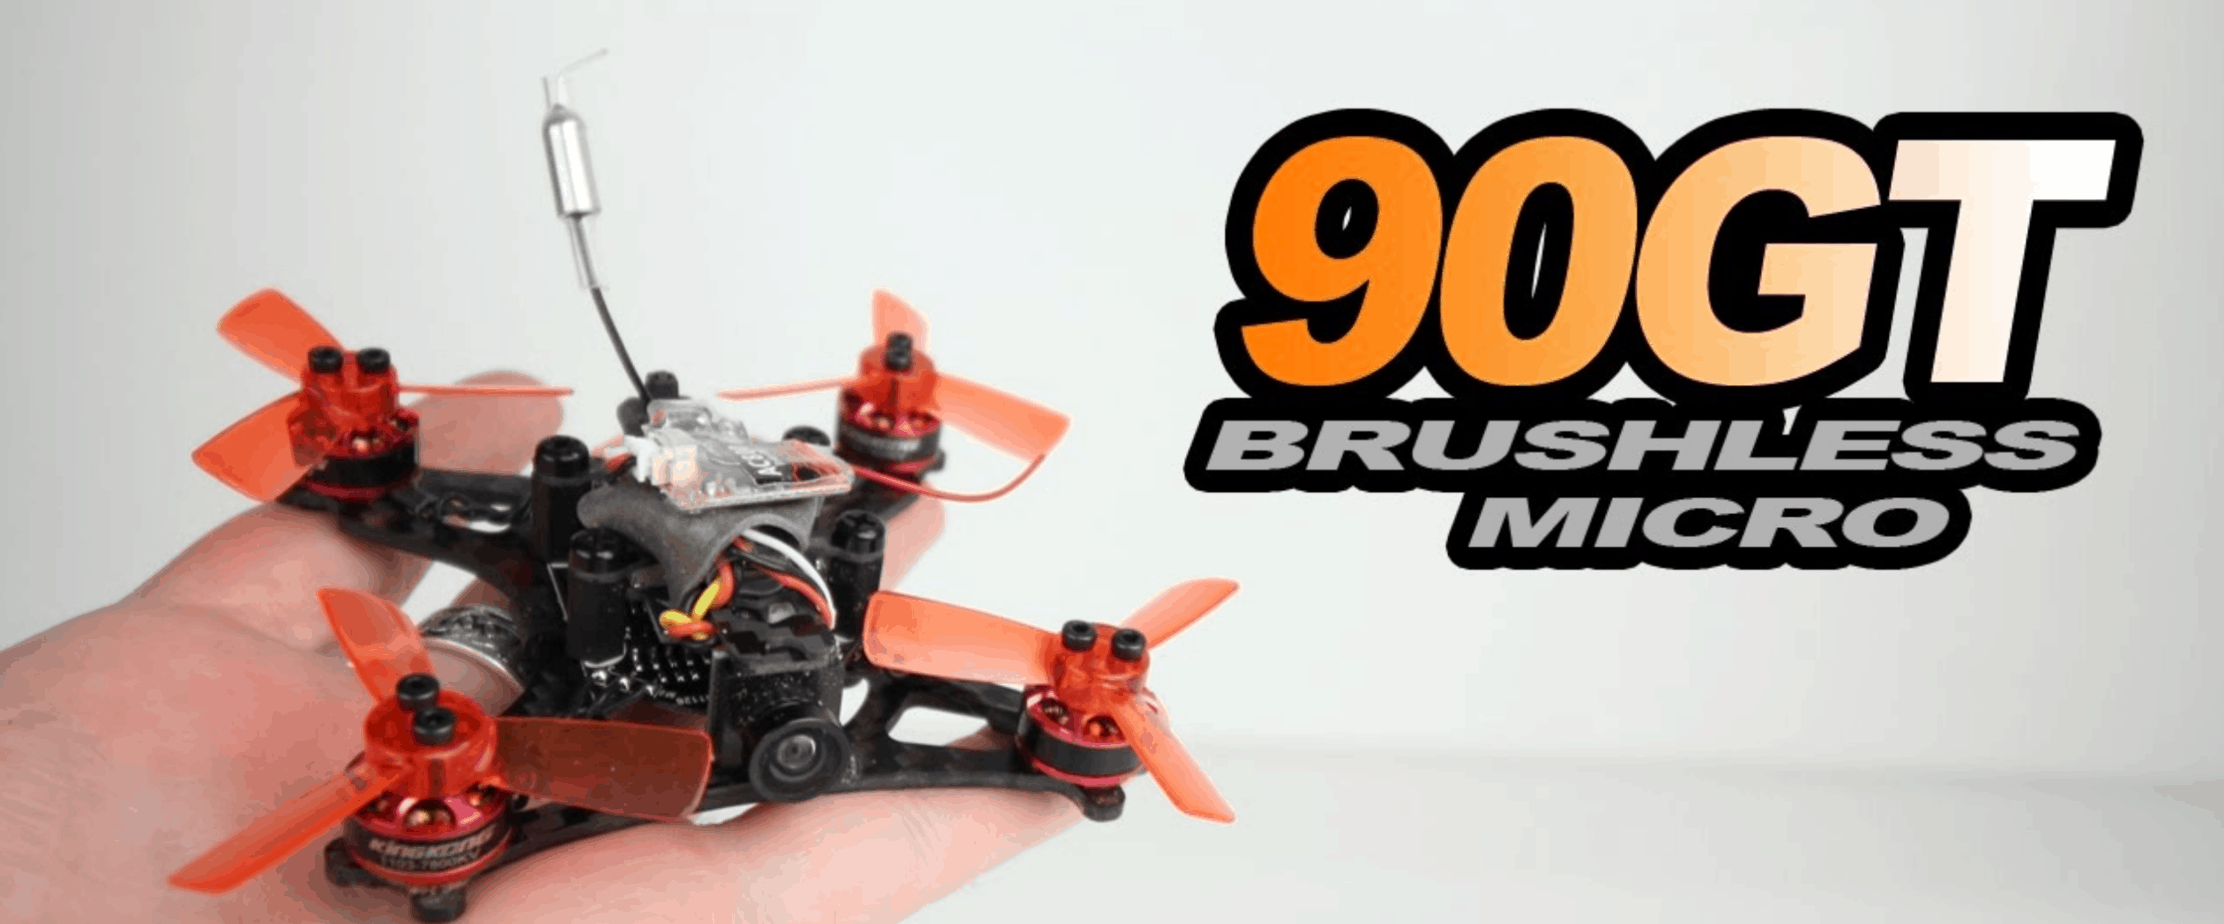 kingkong 90gt drone